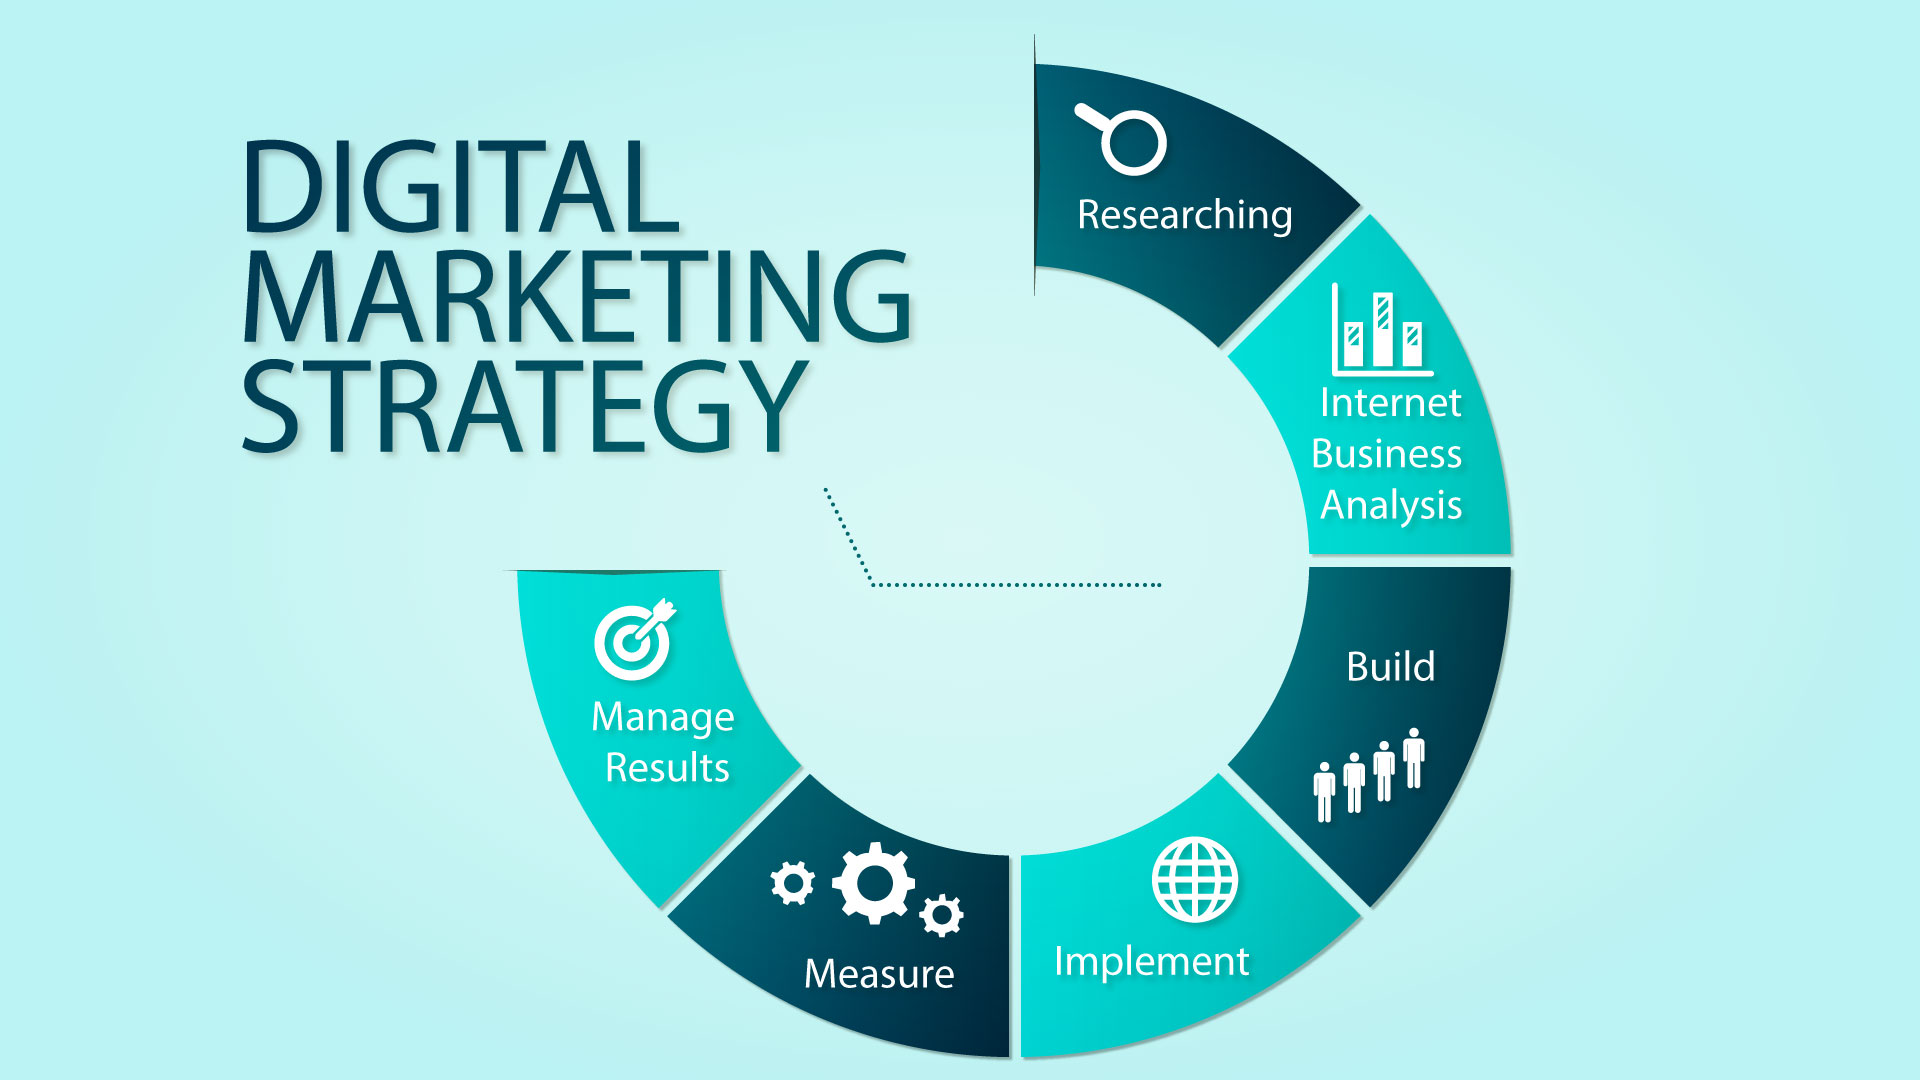 Andrew Rudnick Boca Raton - Digital Marketing Strategy in 2022